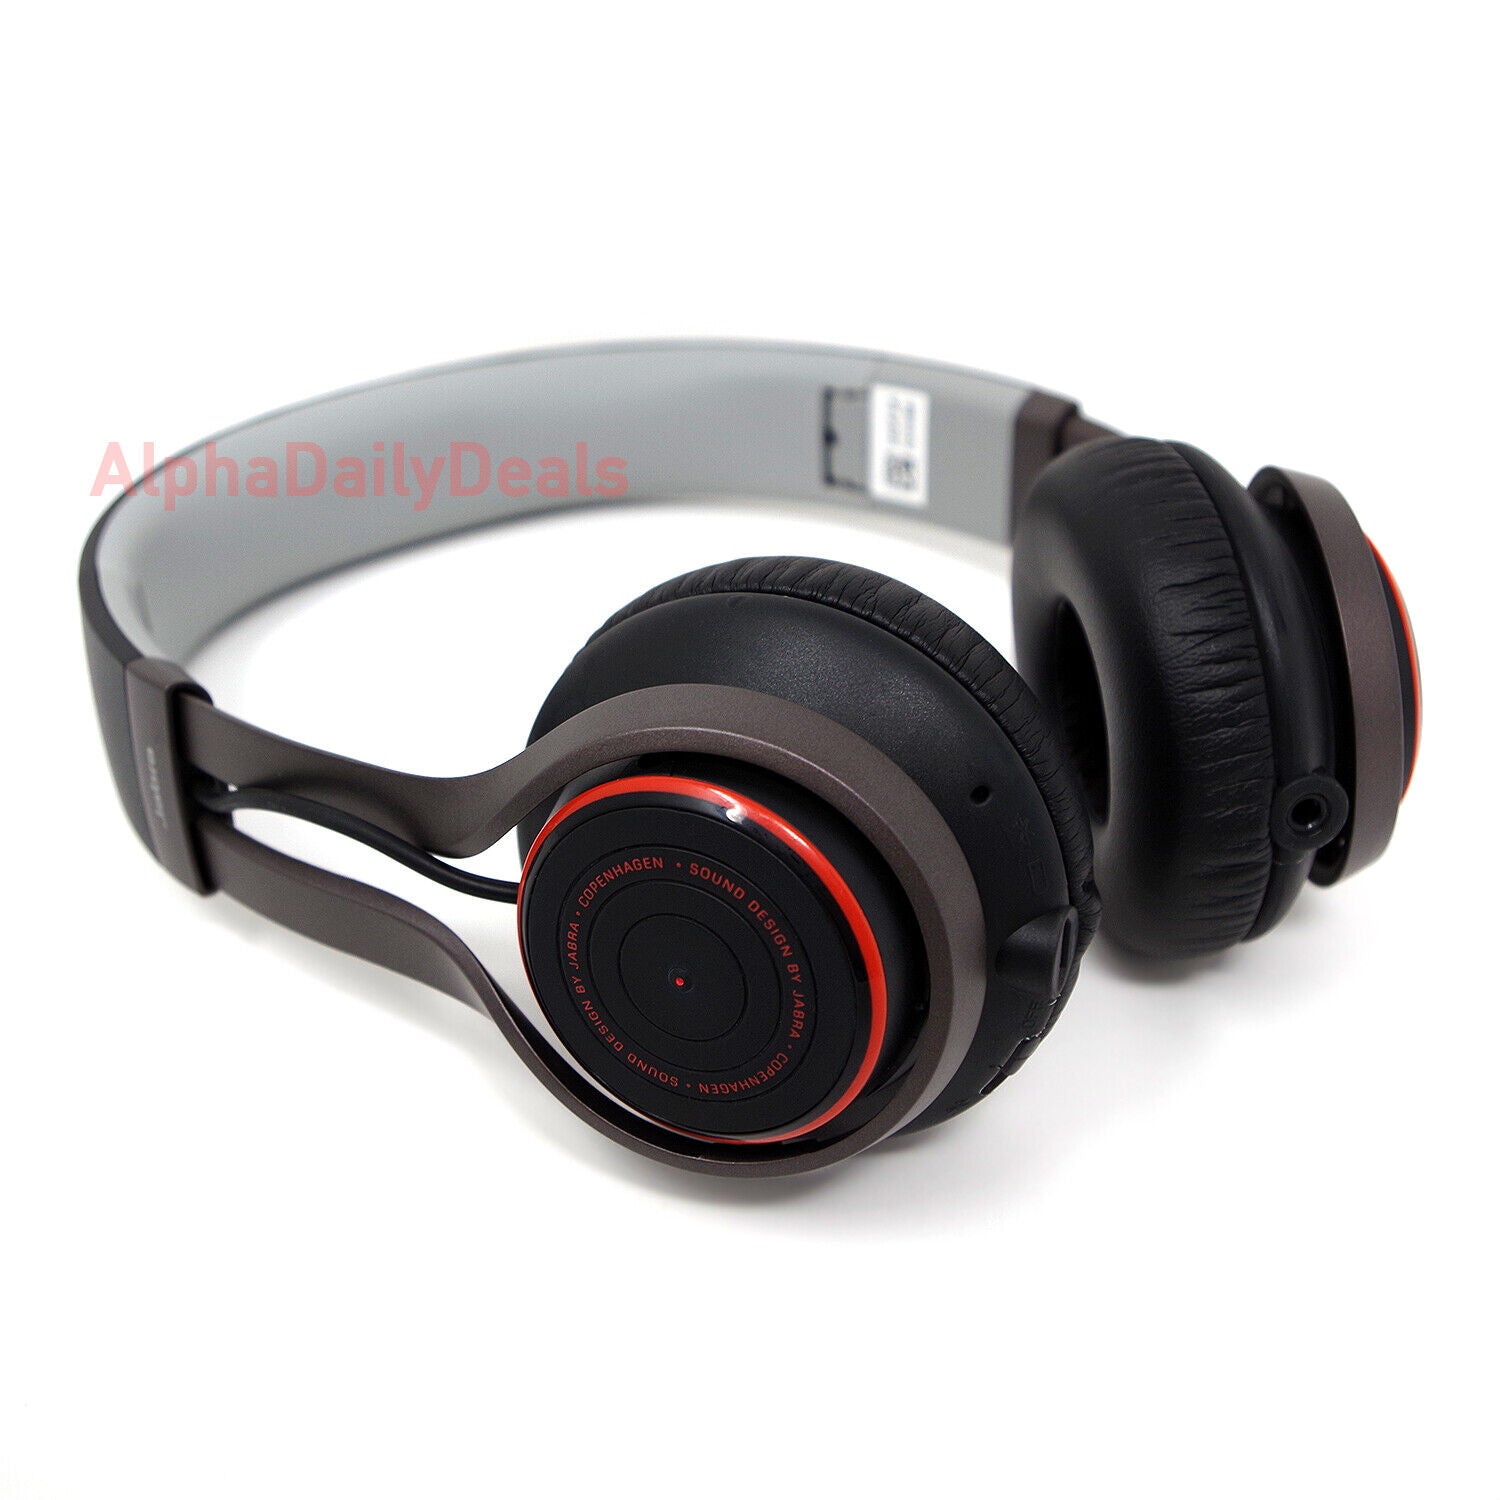 Jabra Revo Wireless Bluetooth On Ear Headphones Headset with Mic Black